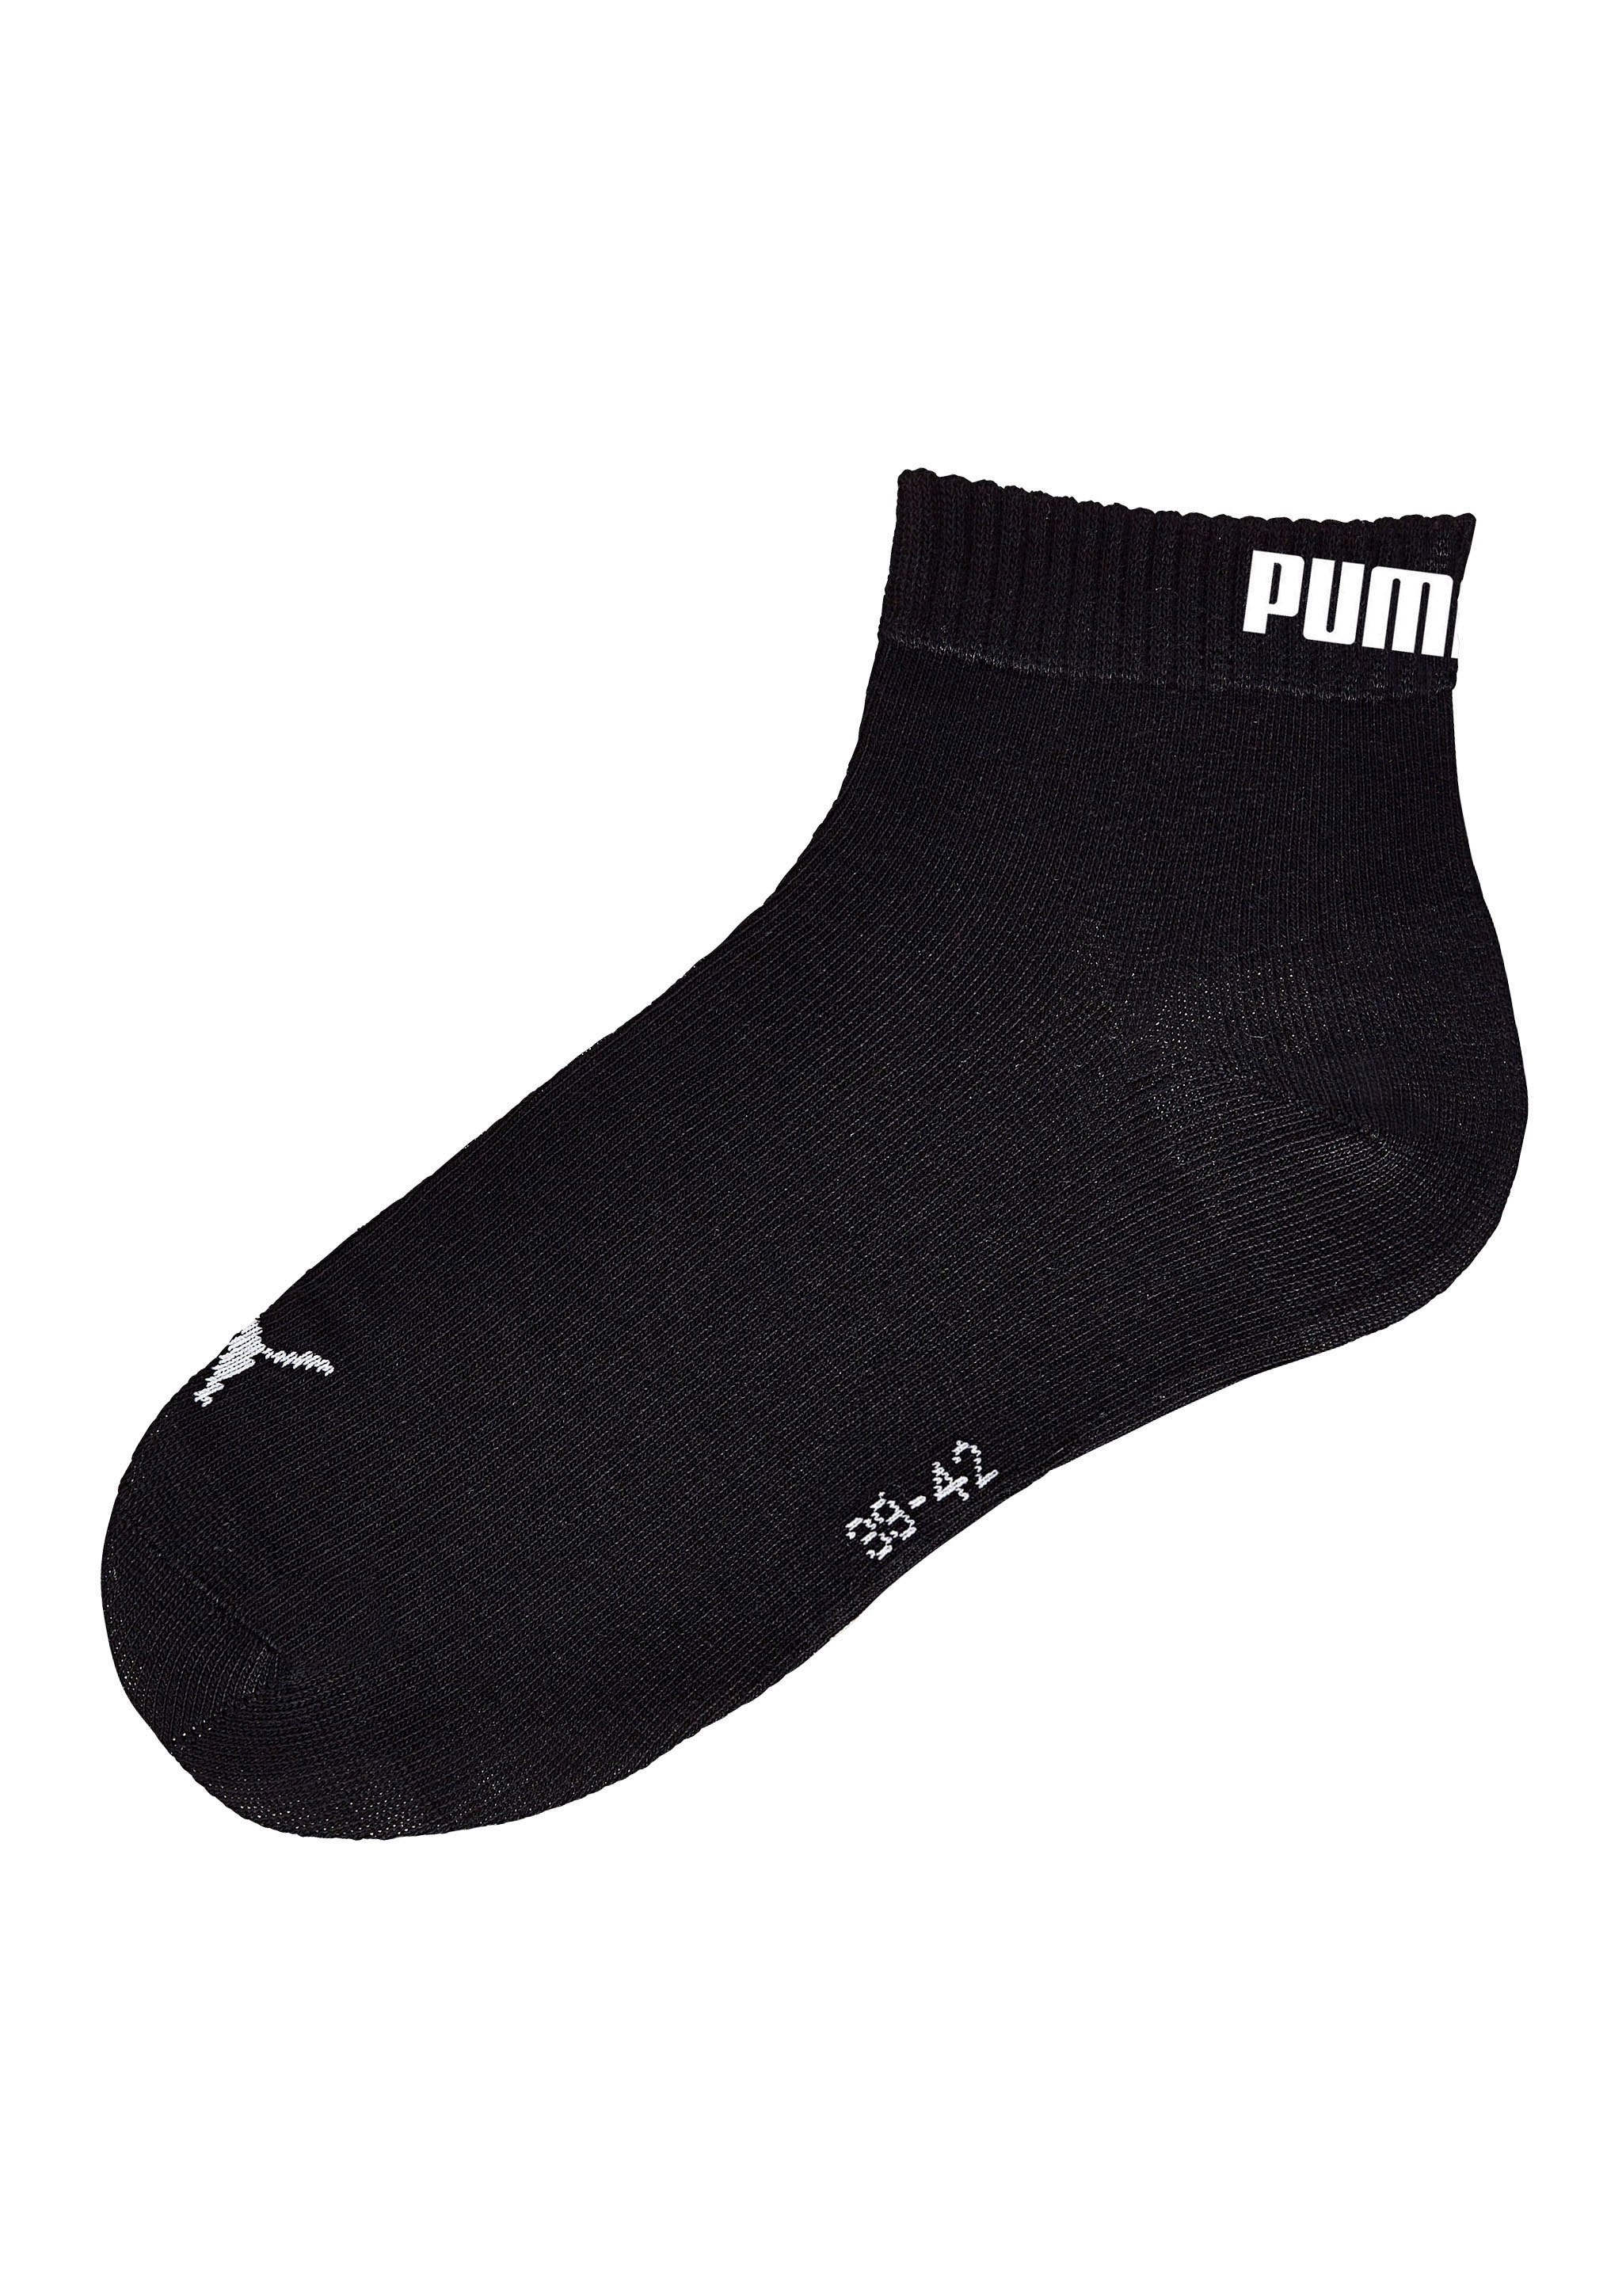 Puma Socken bequem online bestellen